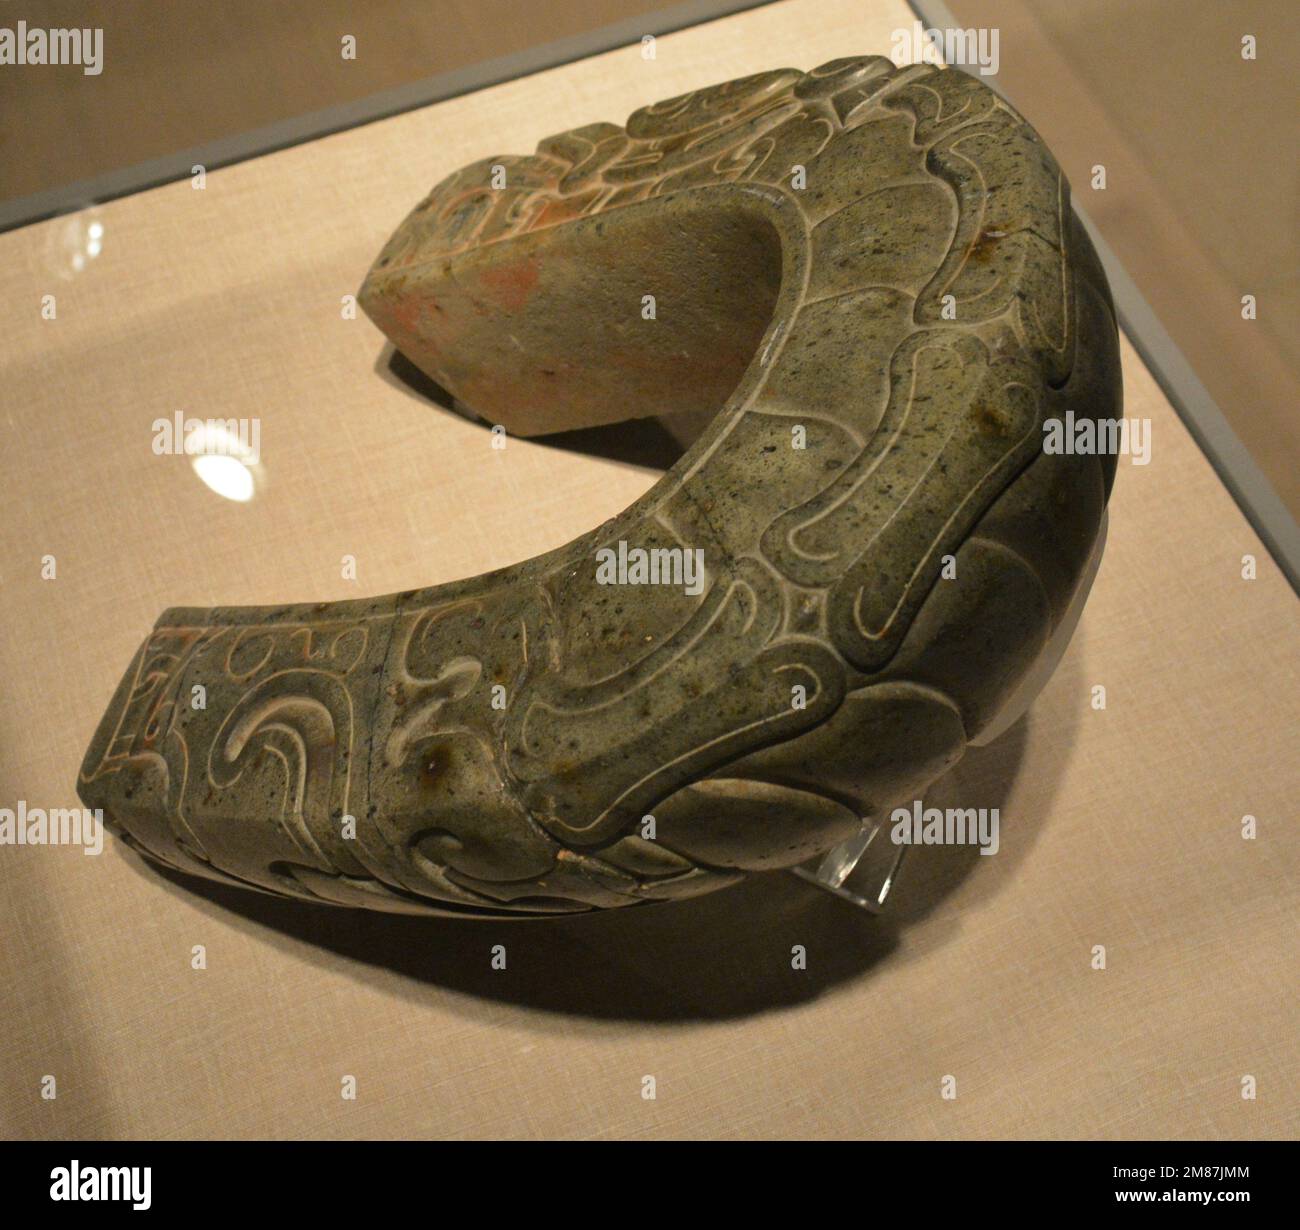 Im Dallas Museum of Art in Dallas, Texas, werden Reptilien und Skelette präkolumbianischer Kunst gezeigt Stockfoto